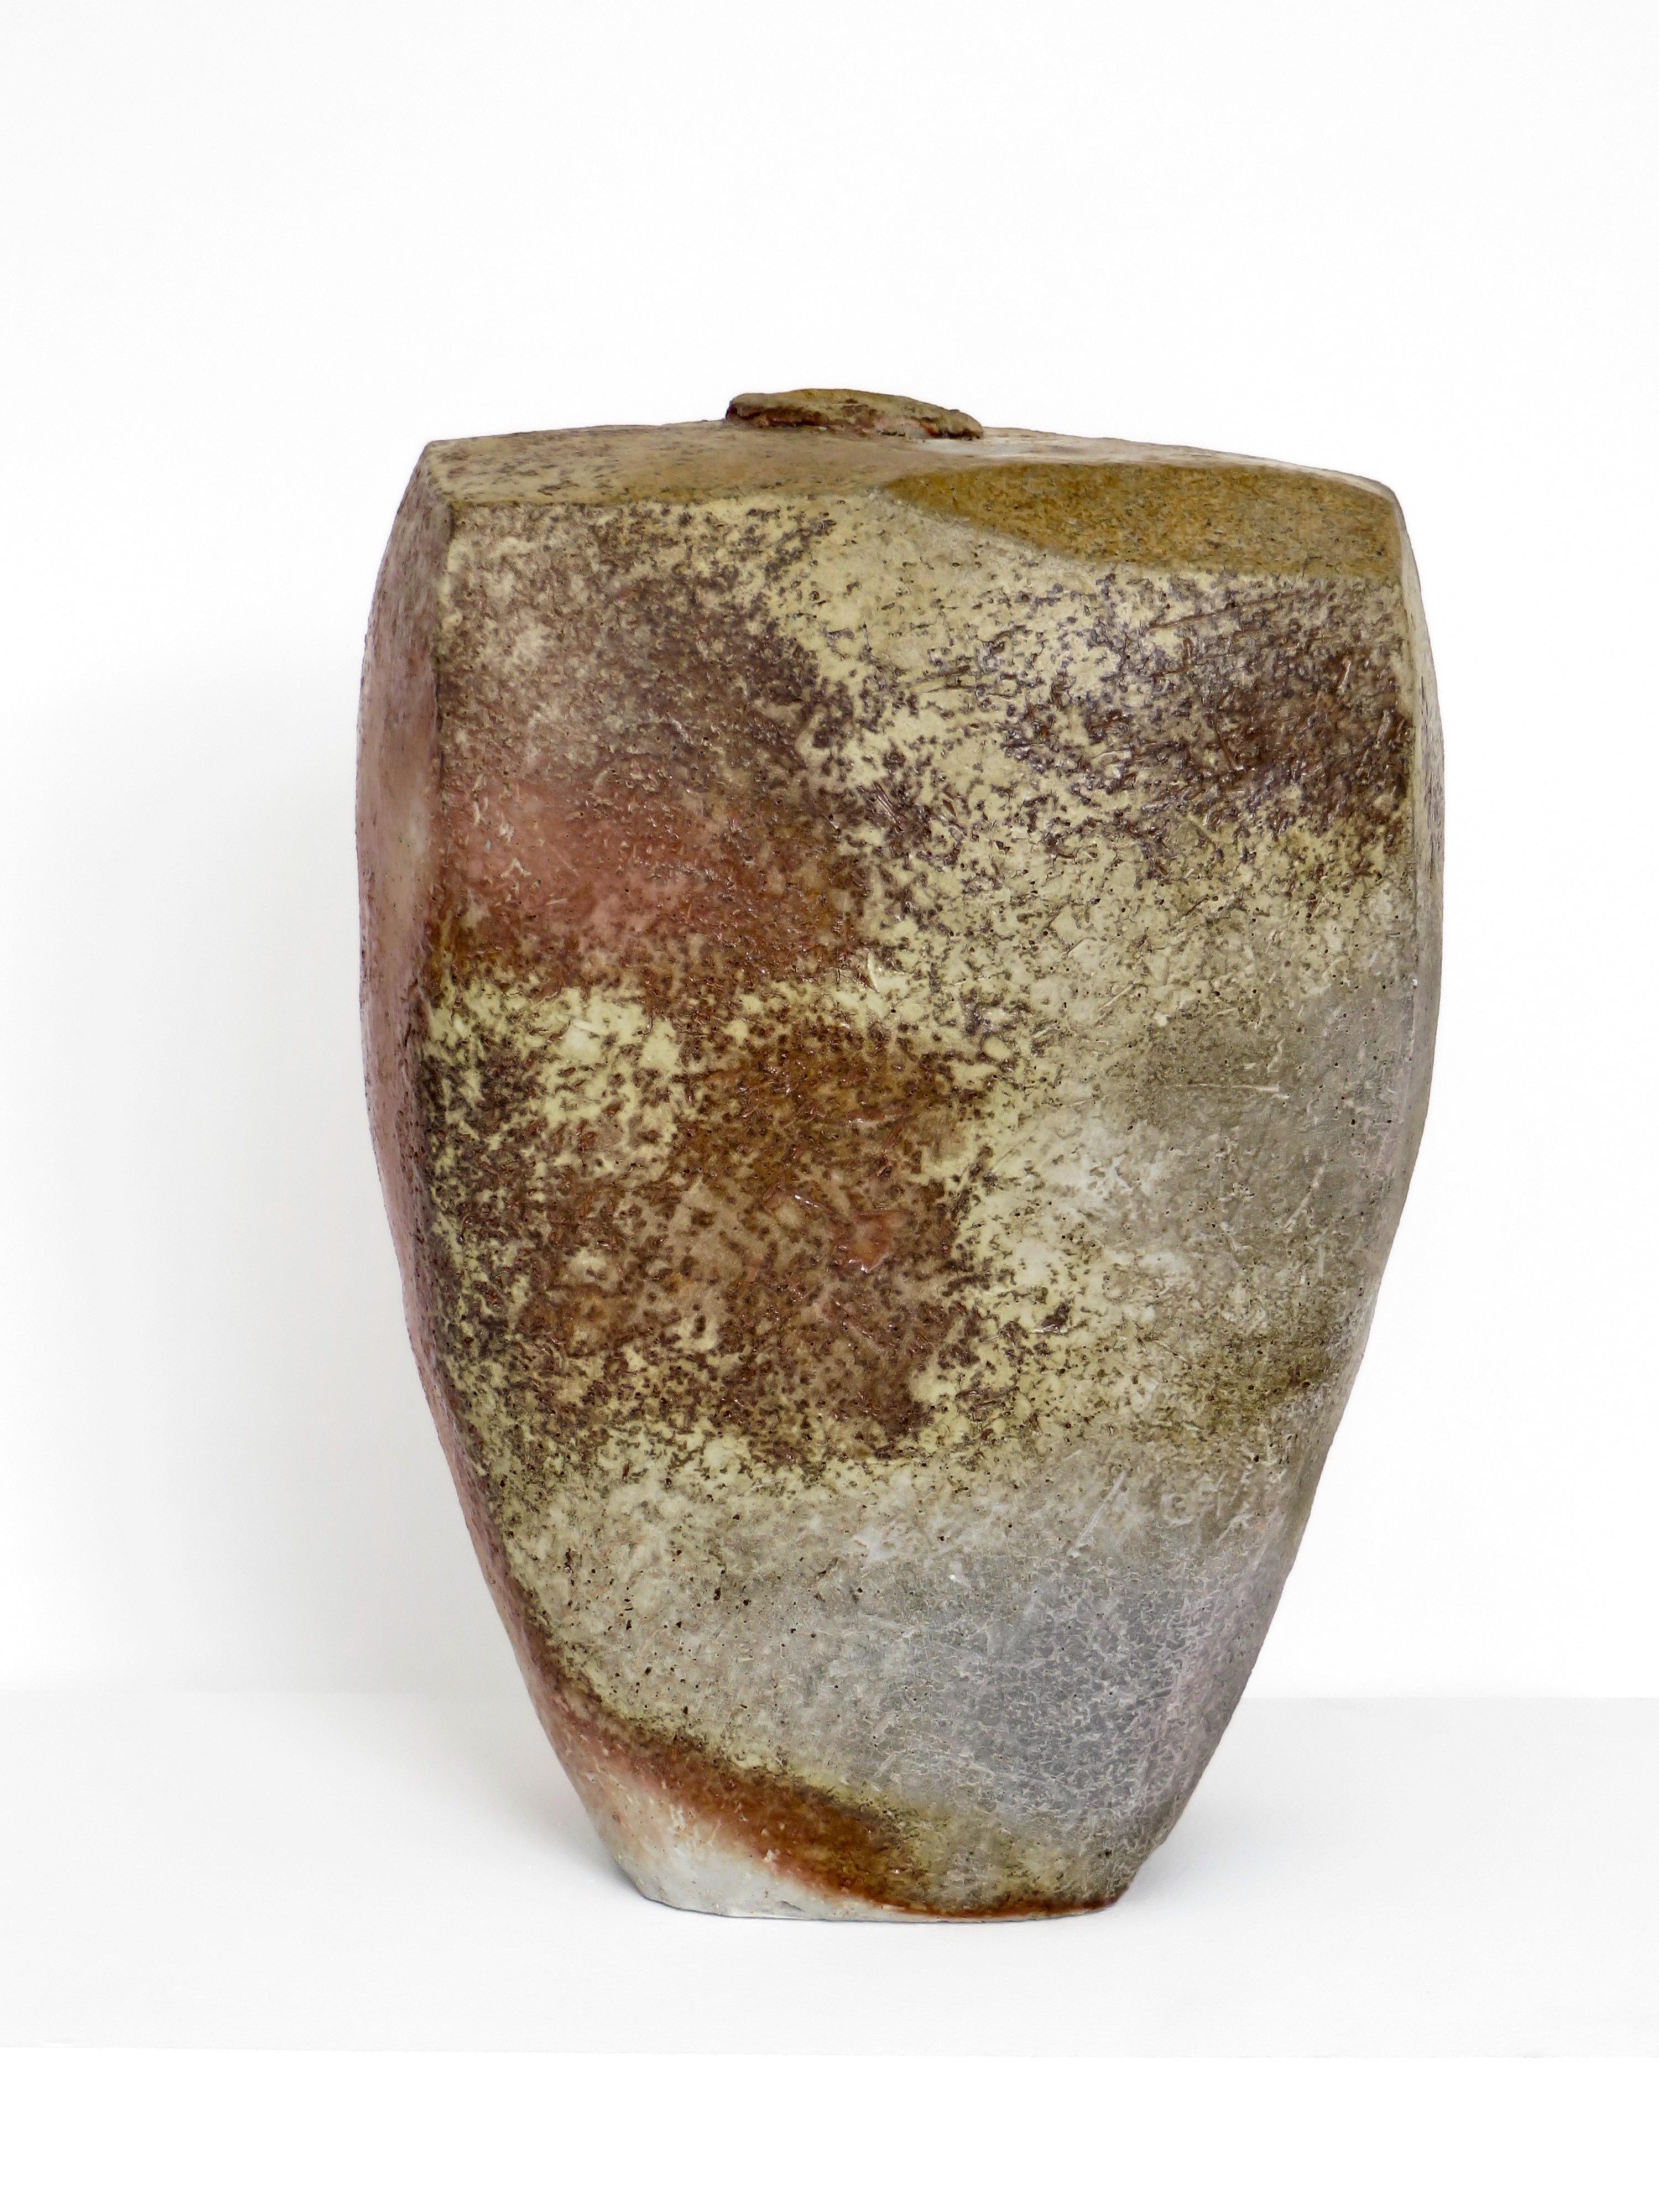 David Whitehead Ceramic Artist Wood Fired Ceramic Vase La Borne France 1